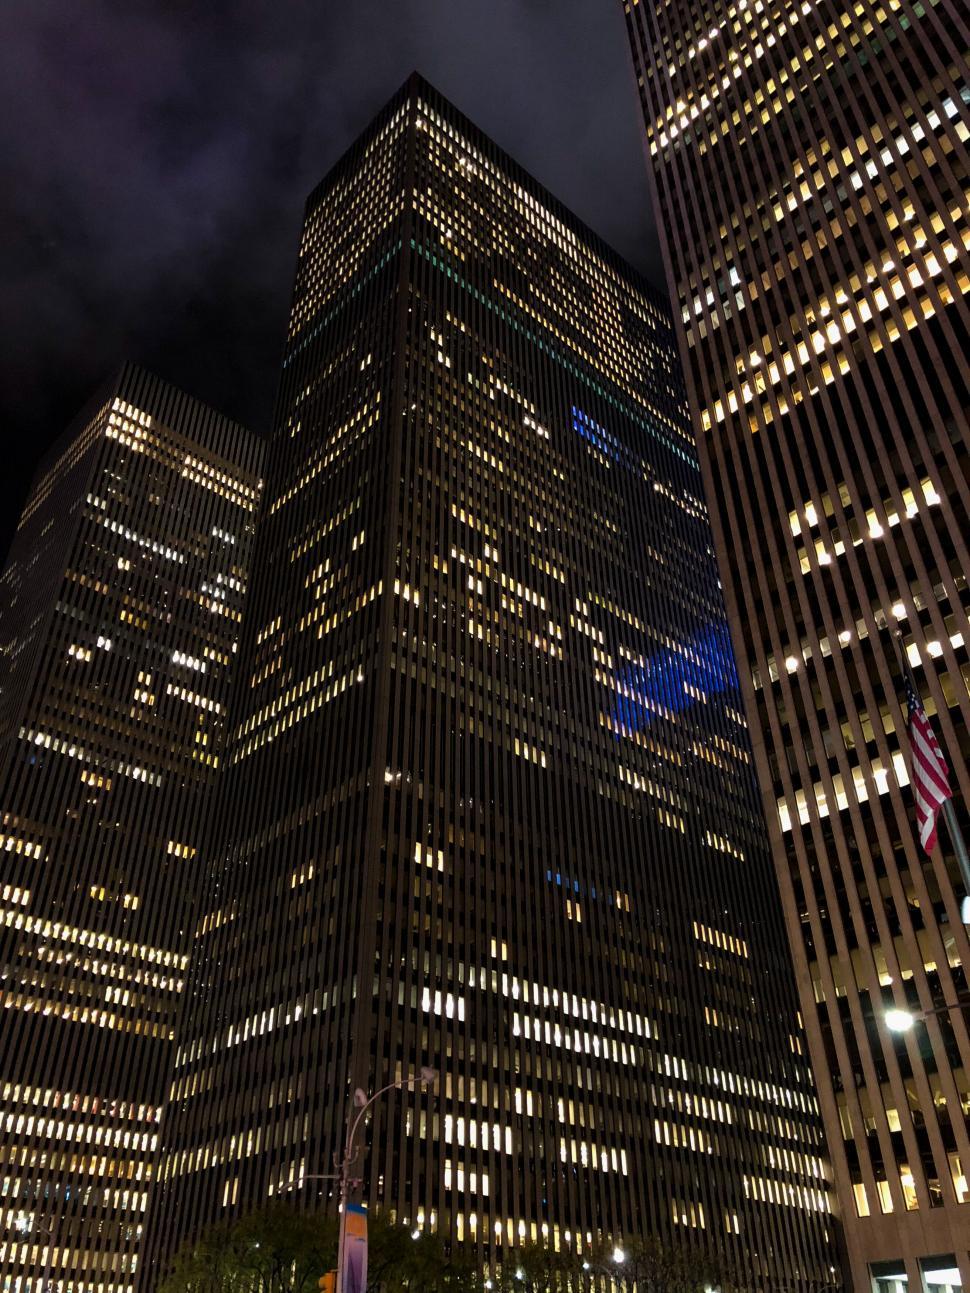 Free Image of Skyscraper facade at night in city 